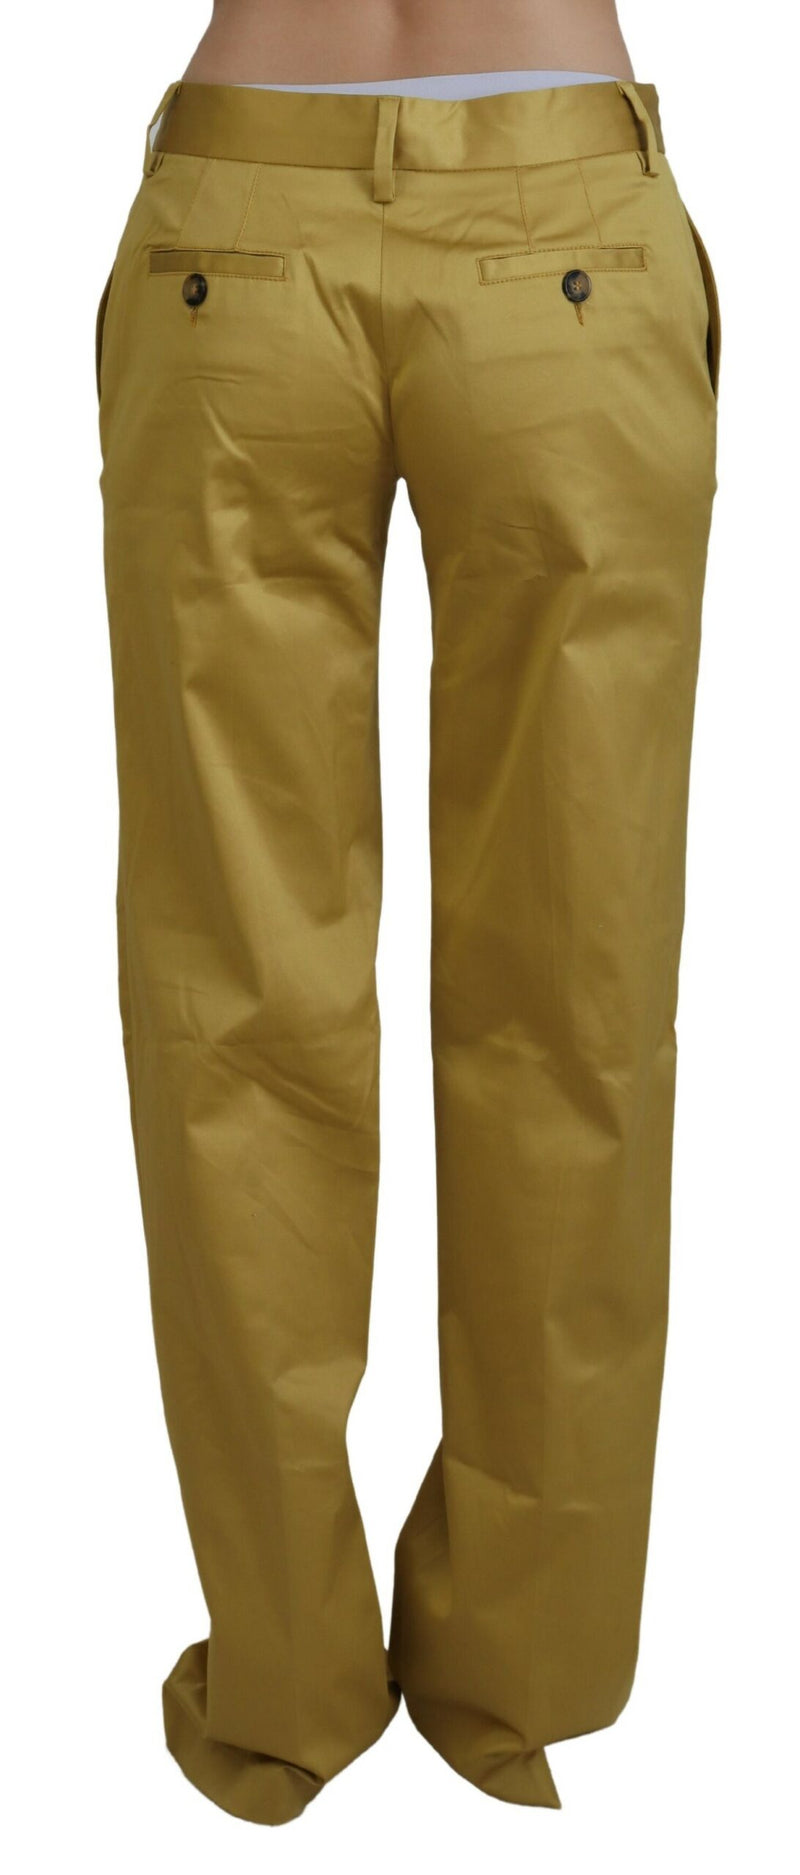 Just Cavalli Elegant Gold Straight Fit Women's Pants